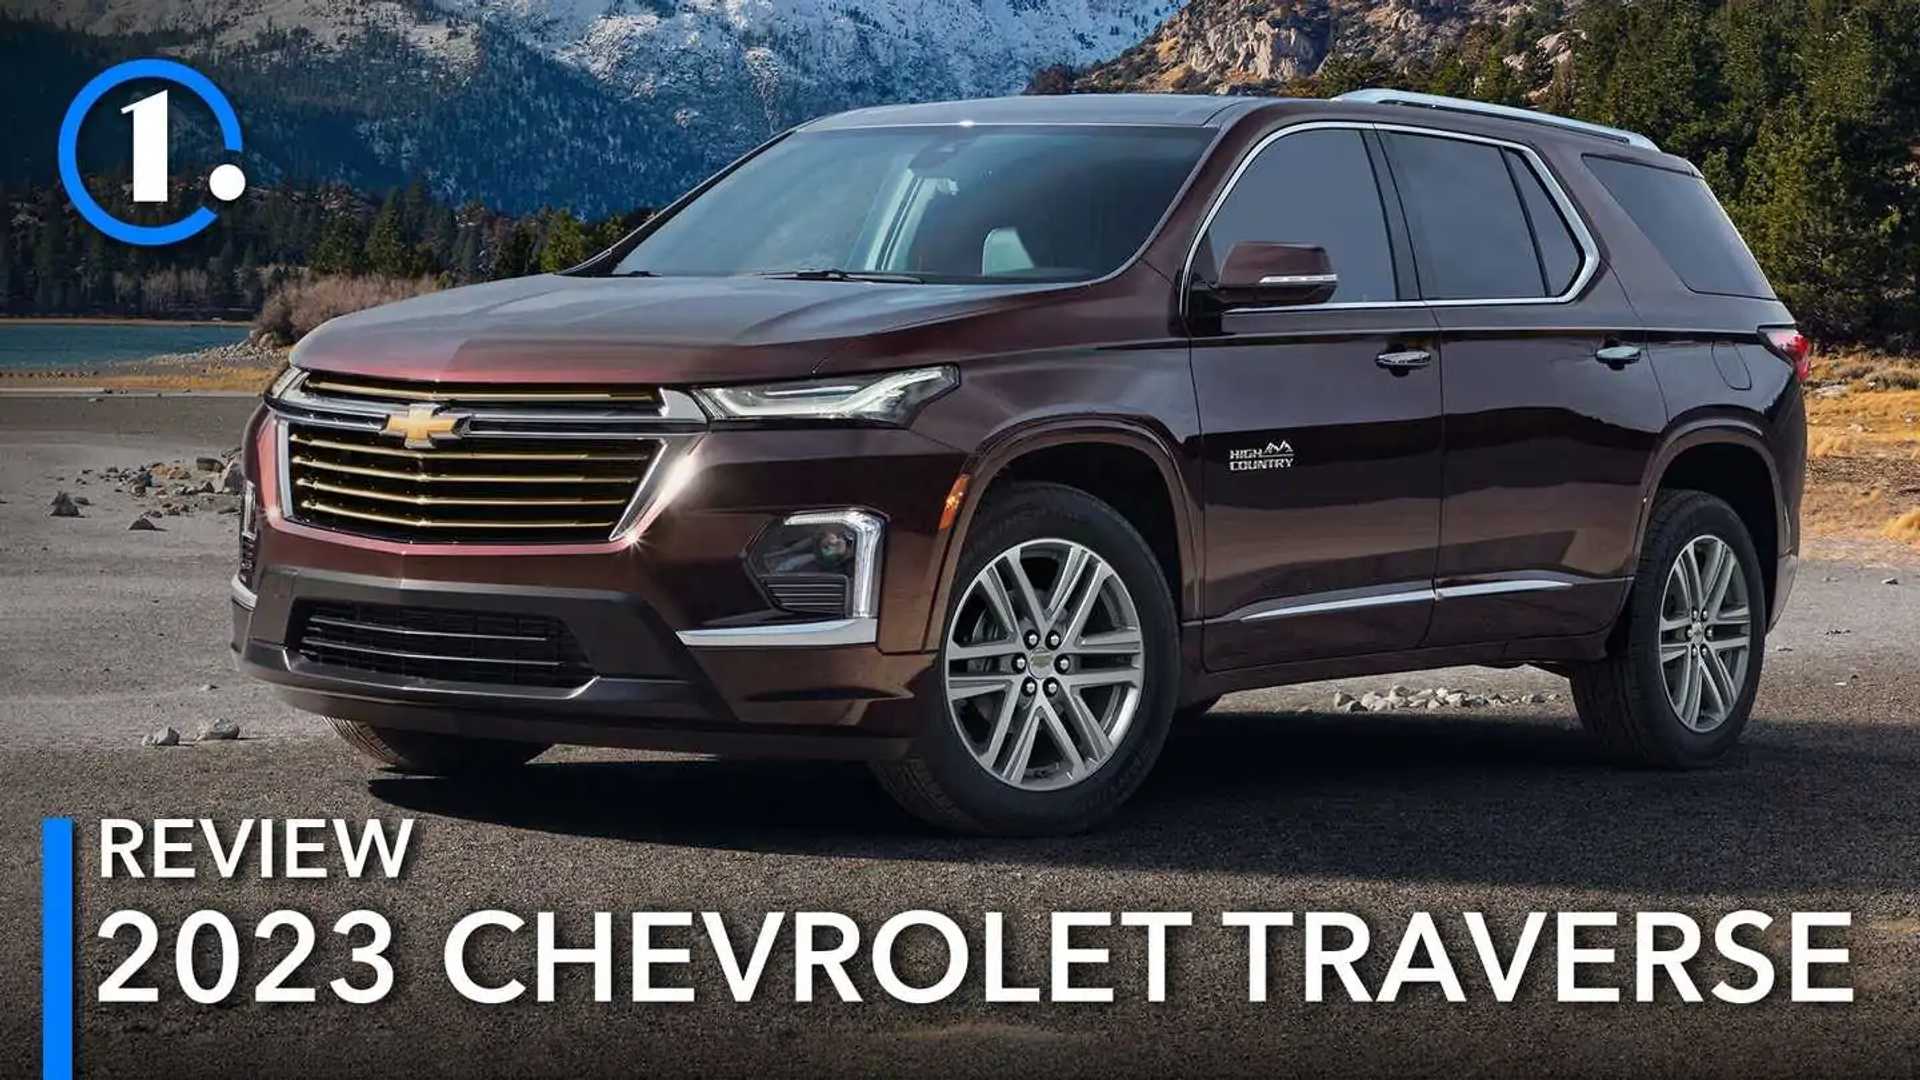 2023 Chevrolet Traverse Review: Spatial Reasoning | Motor1.com